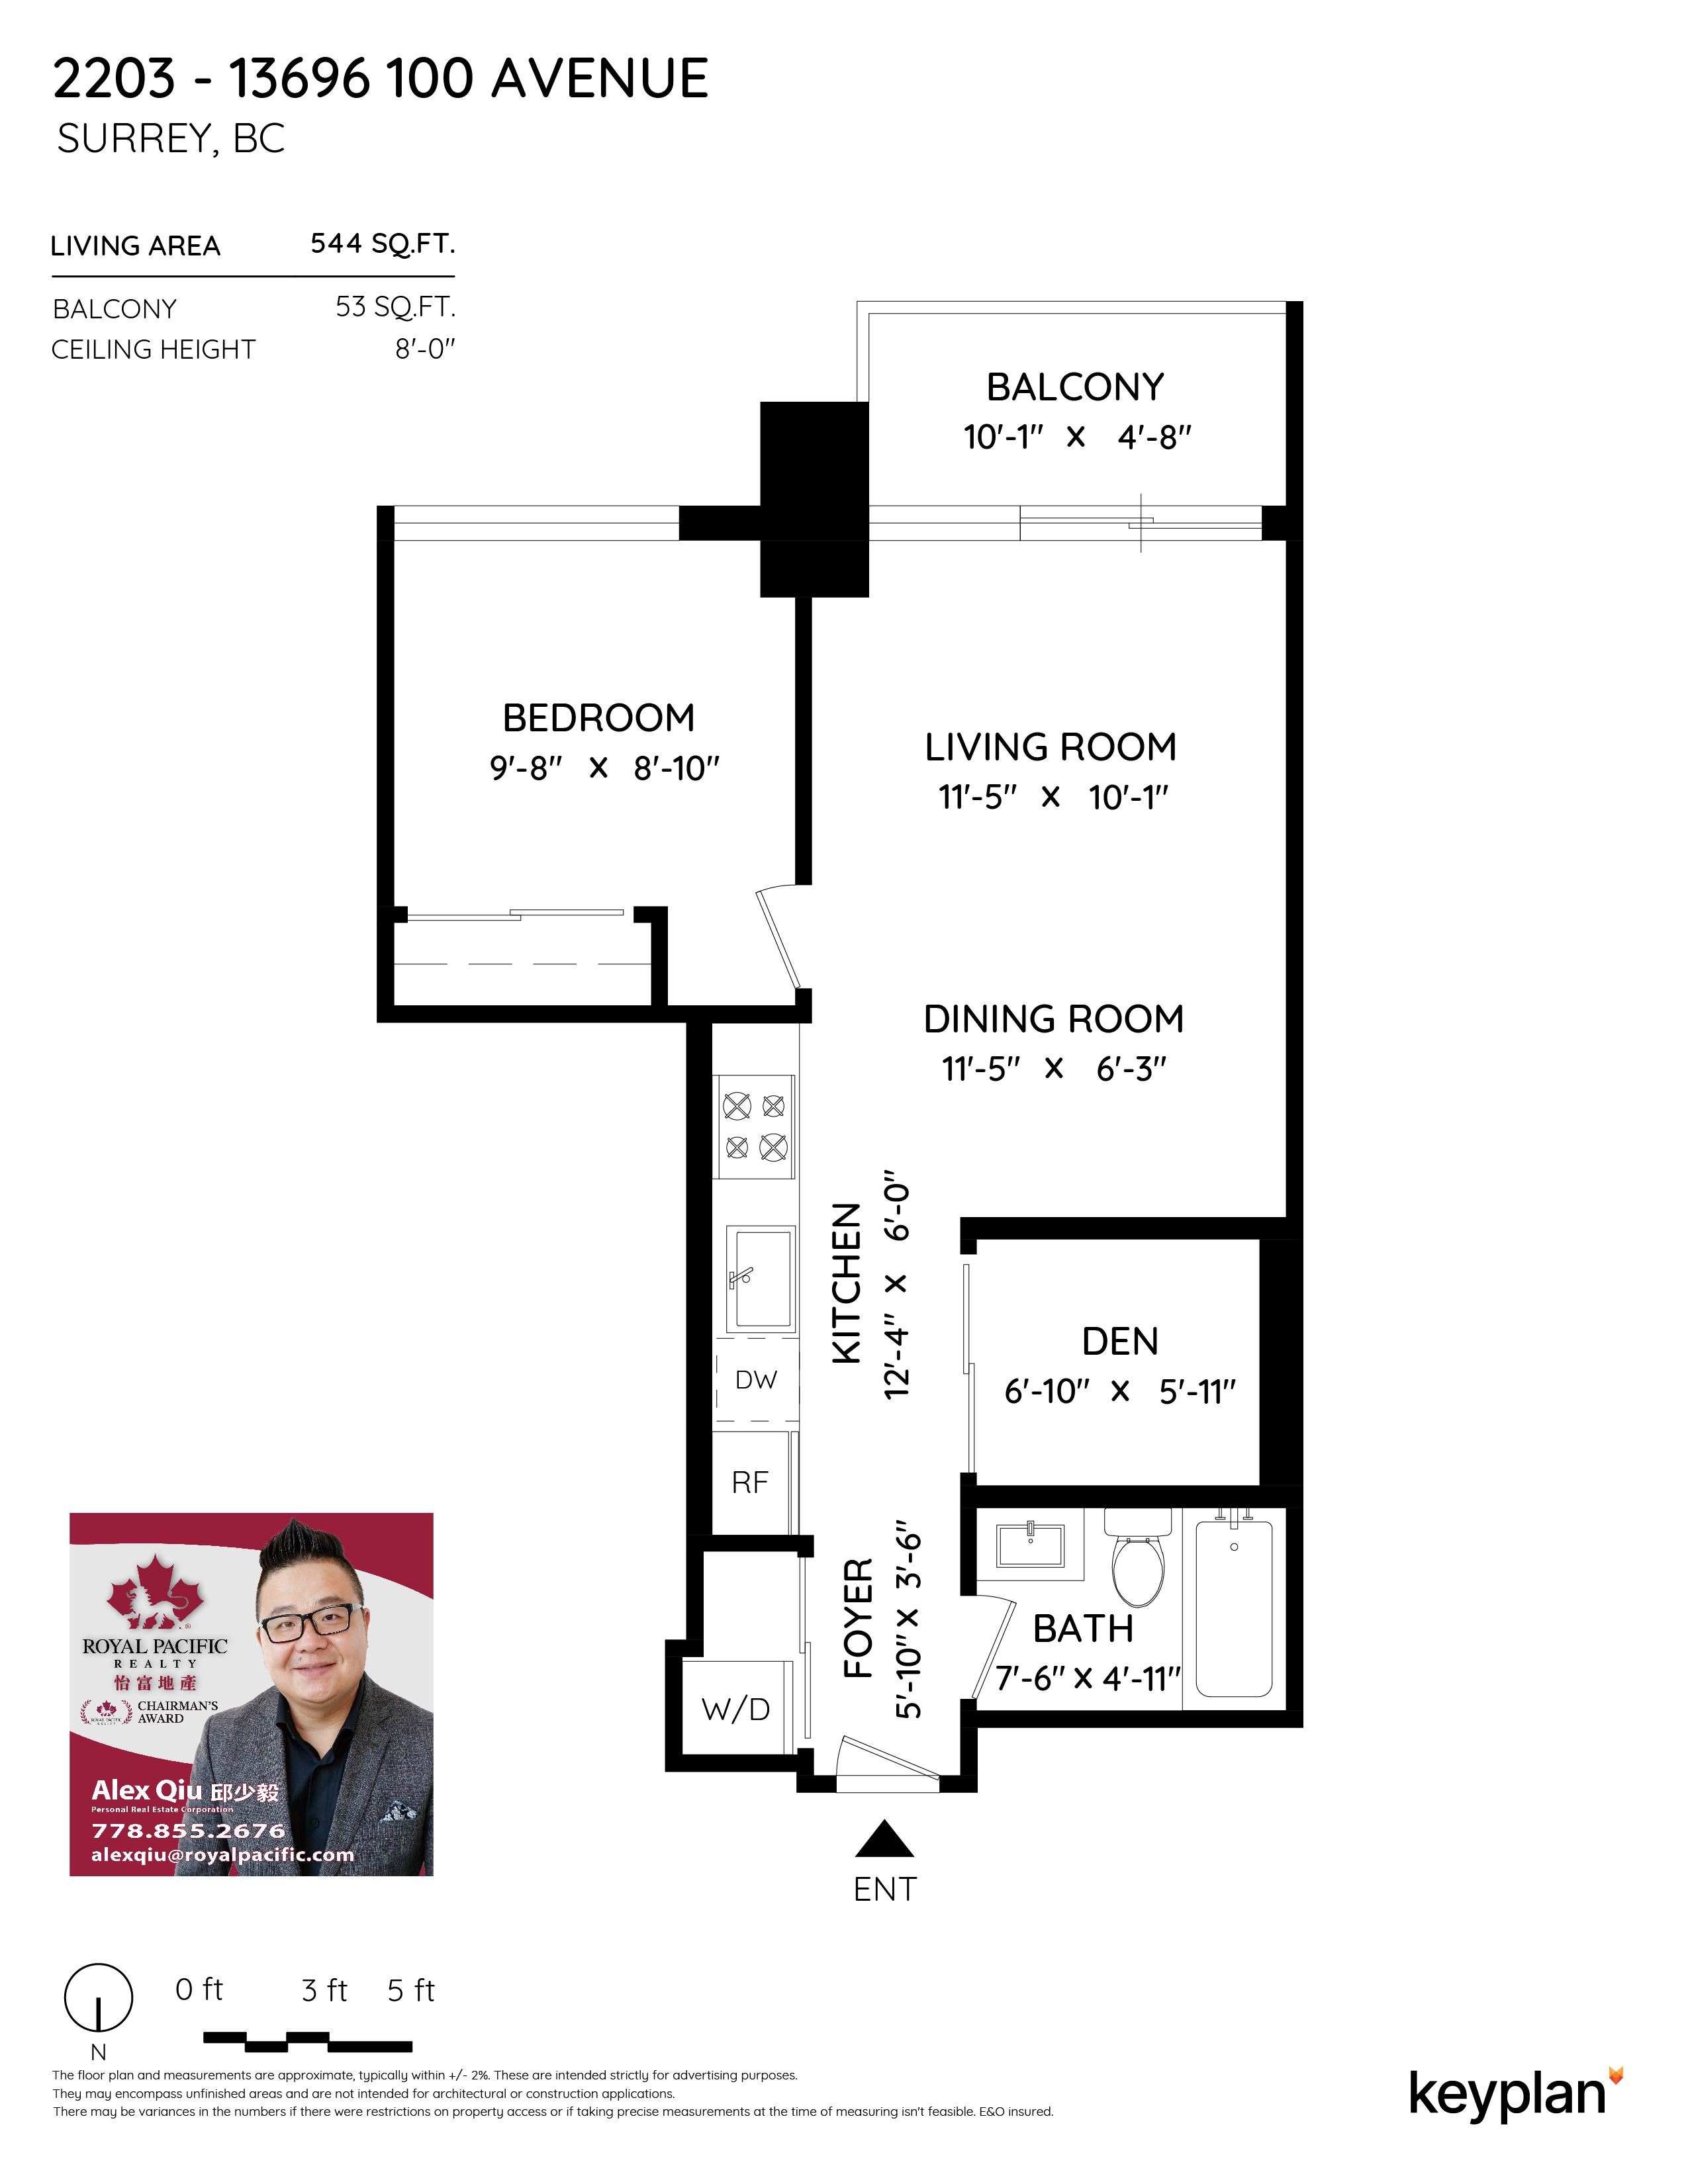 Alex Qiu - Unit 2203 - 13696 100 Avenue, Surrey, BC, Canada | Floor Plan 1